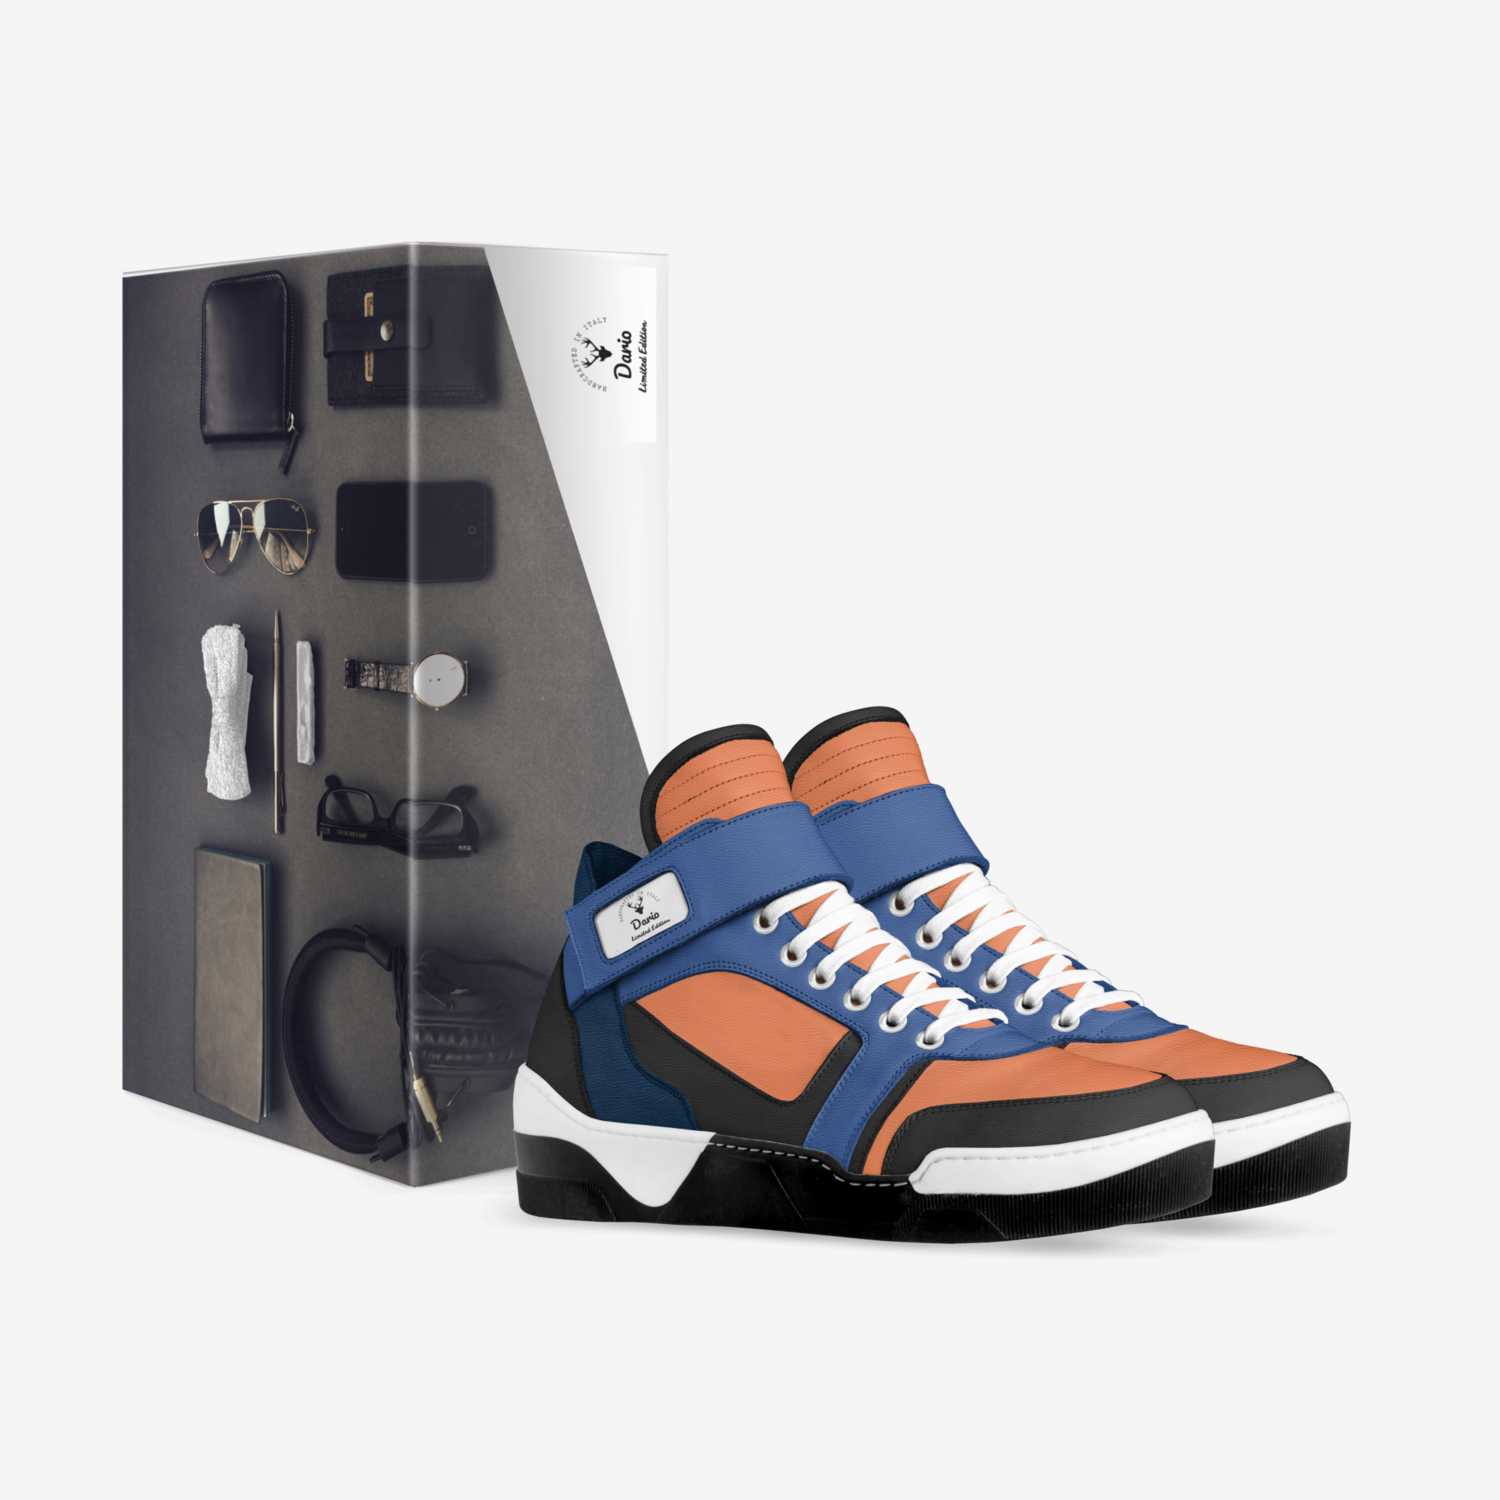 Dario custom made in Italy shoes by Darel Wesley | Box view